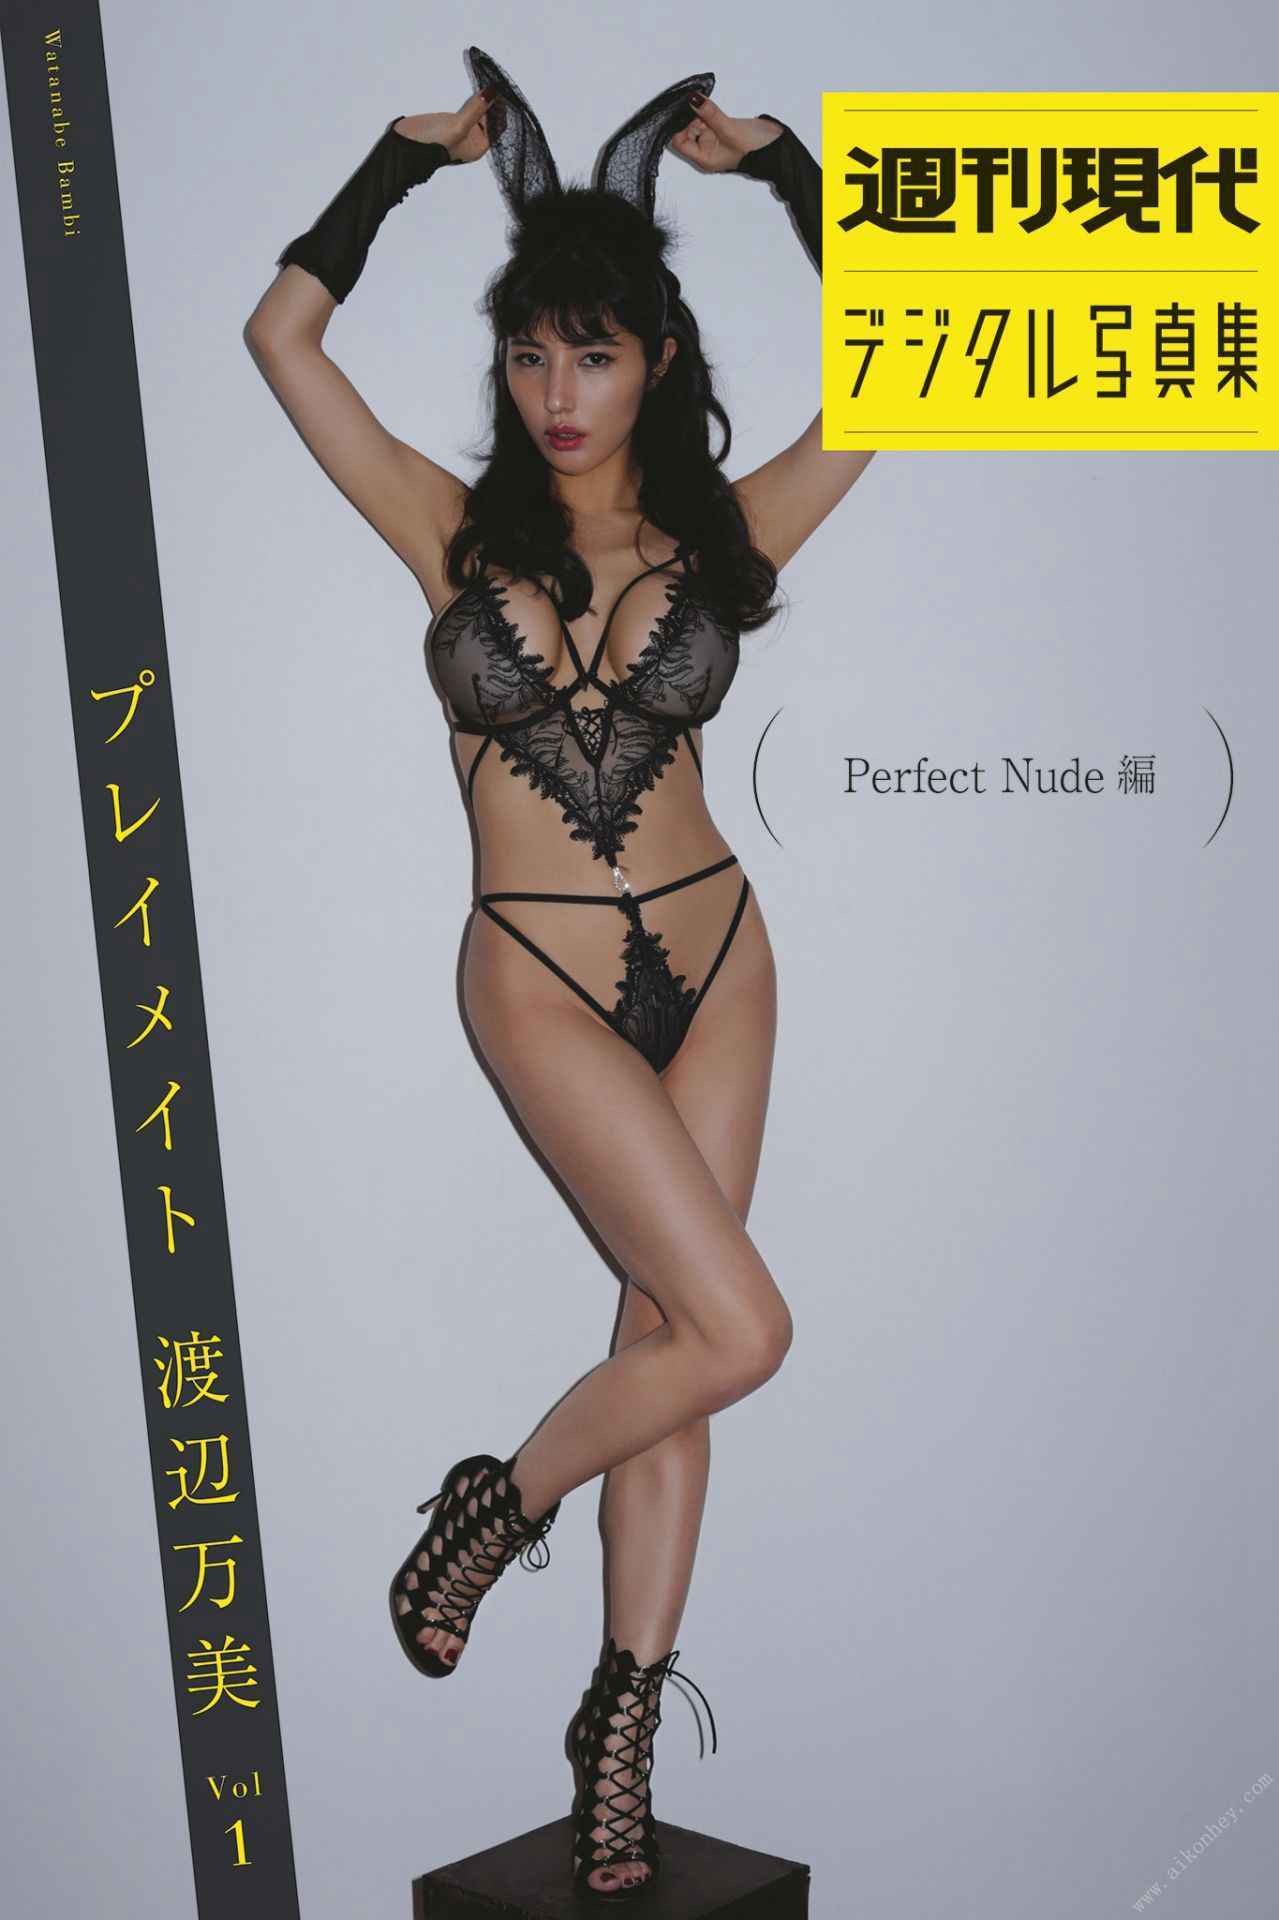 Watanabe Manmi - Playmate vol.1 Perfect Nude Edition プレイメイトvol.1perfect nude